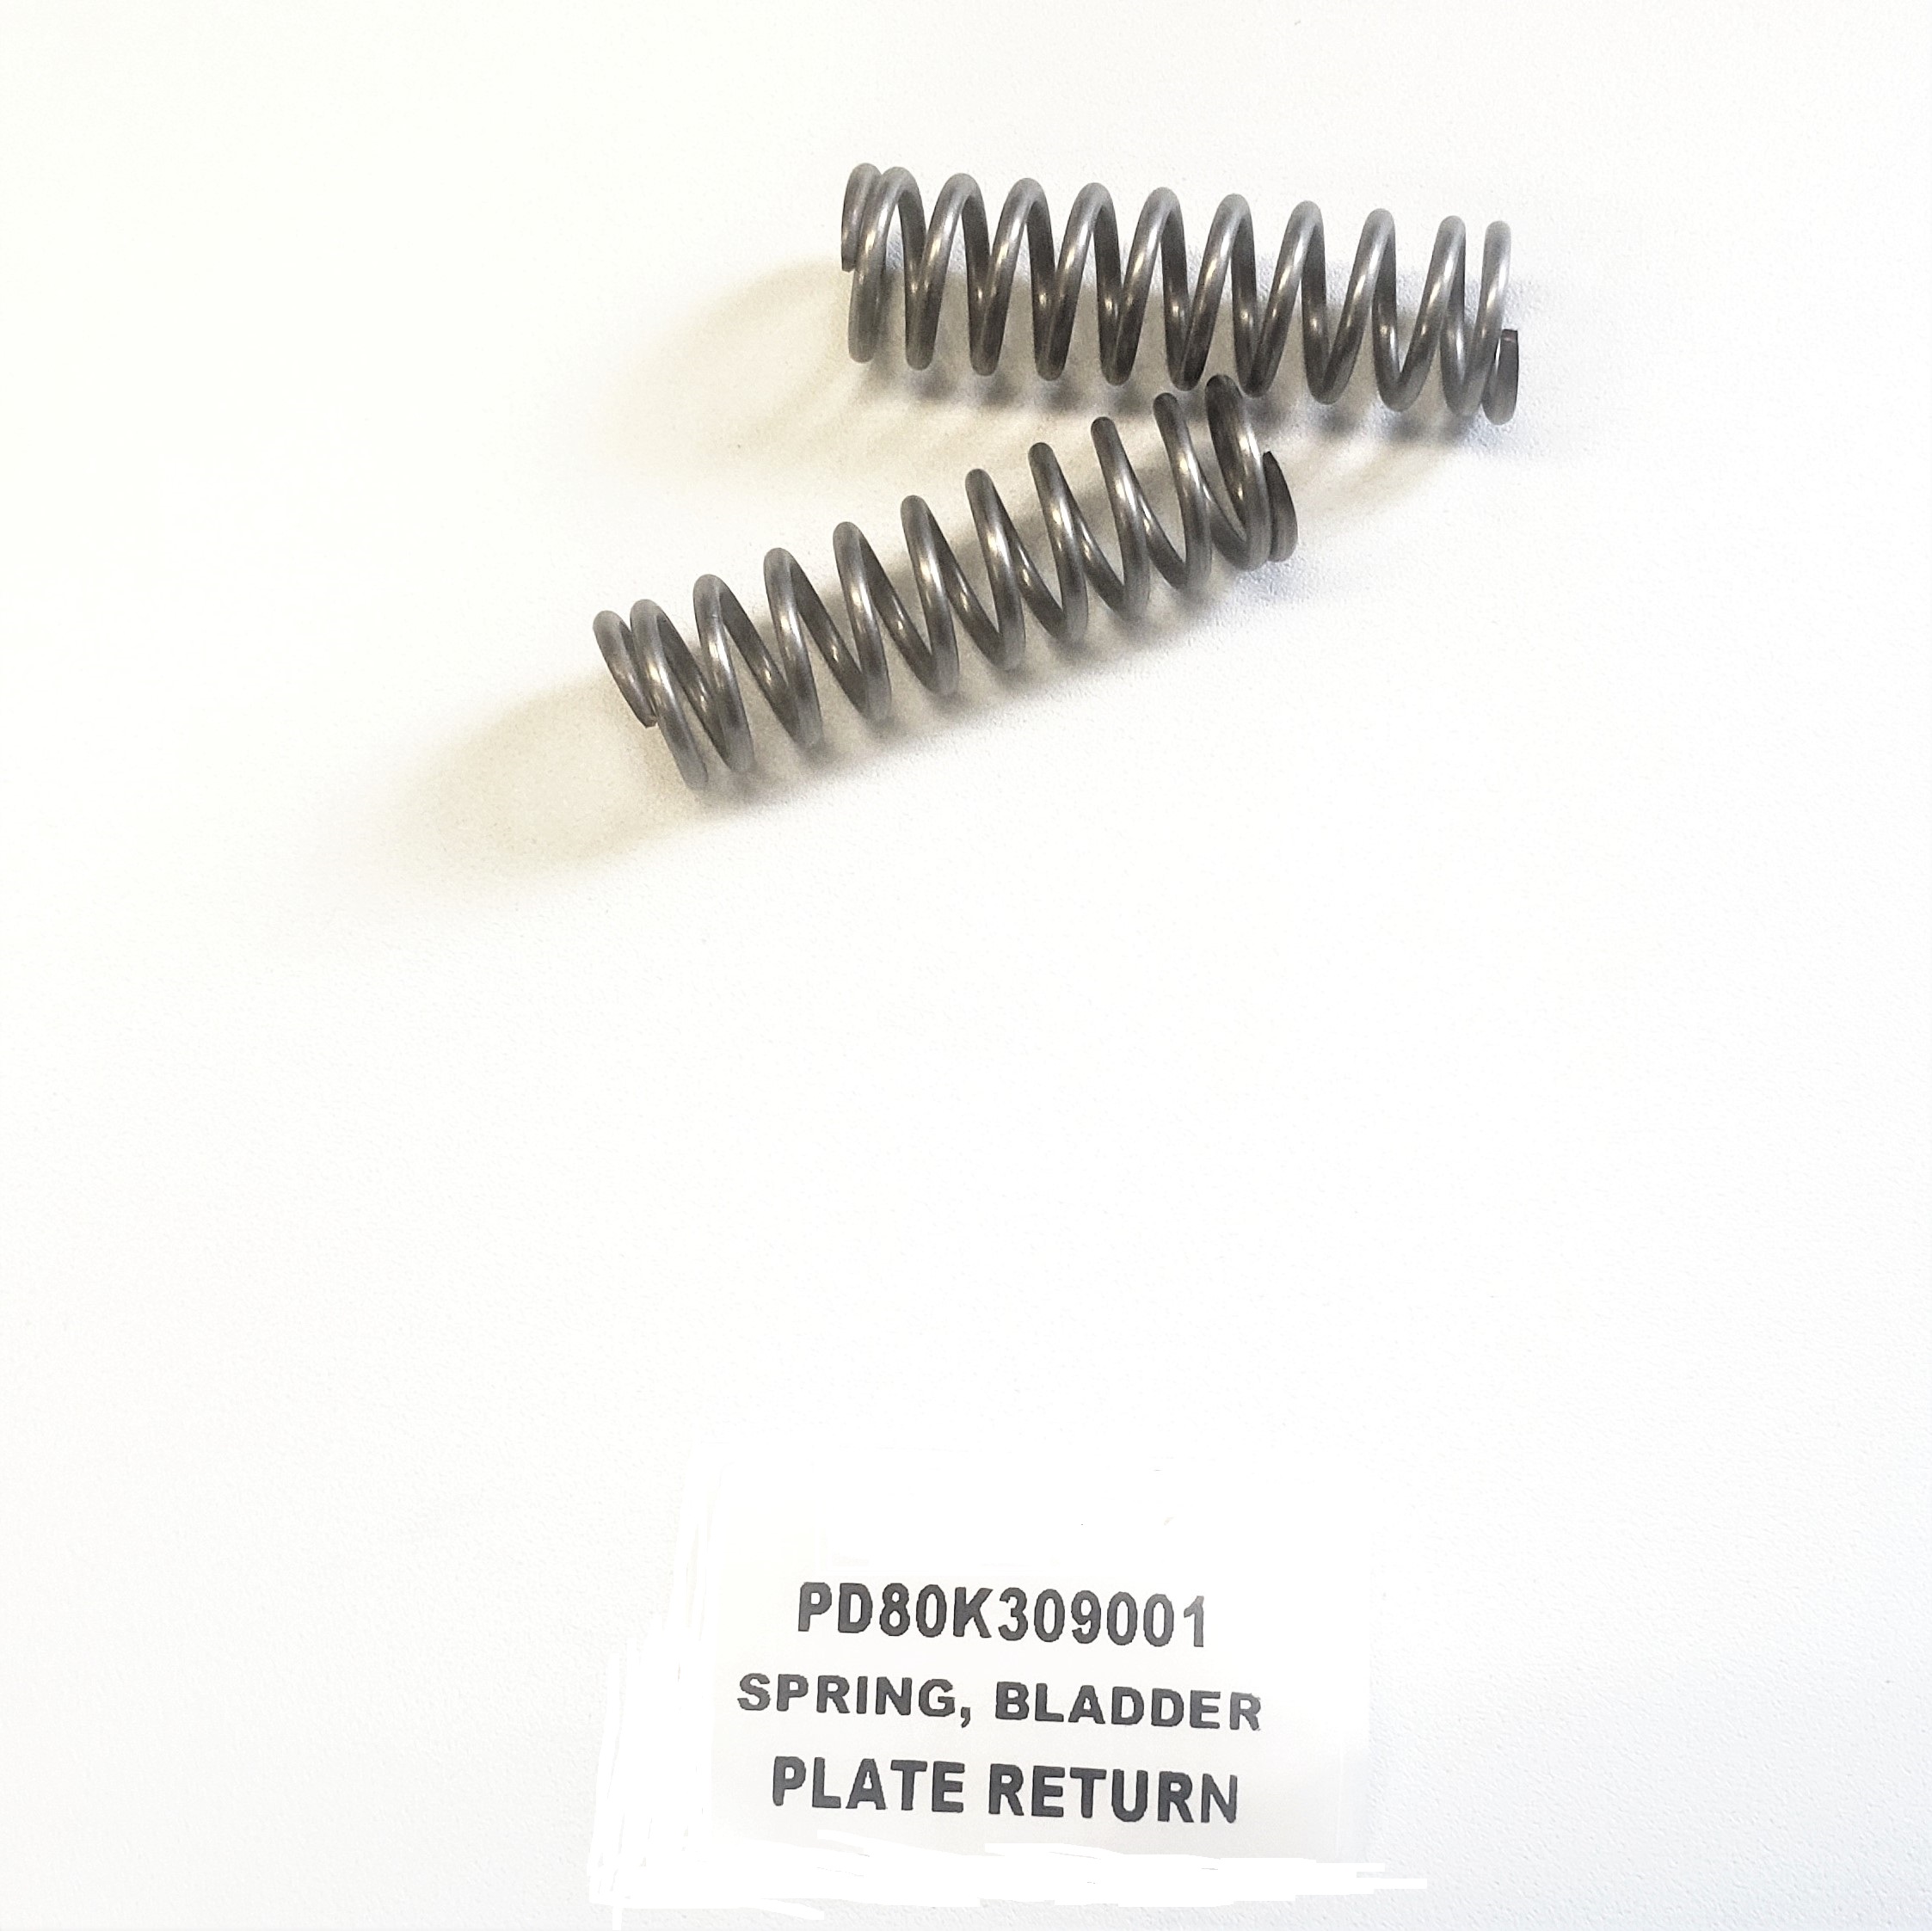 BLADDER PLATE RETURN SPRINGS (NOT FOR MACHINE WITH KNIFE) D80K309001